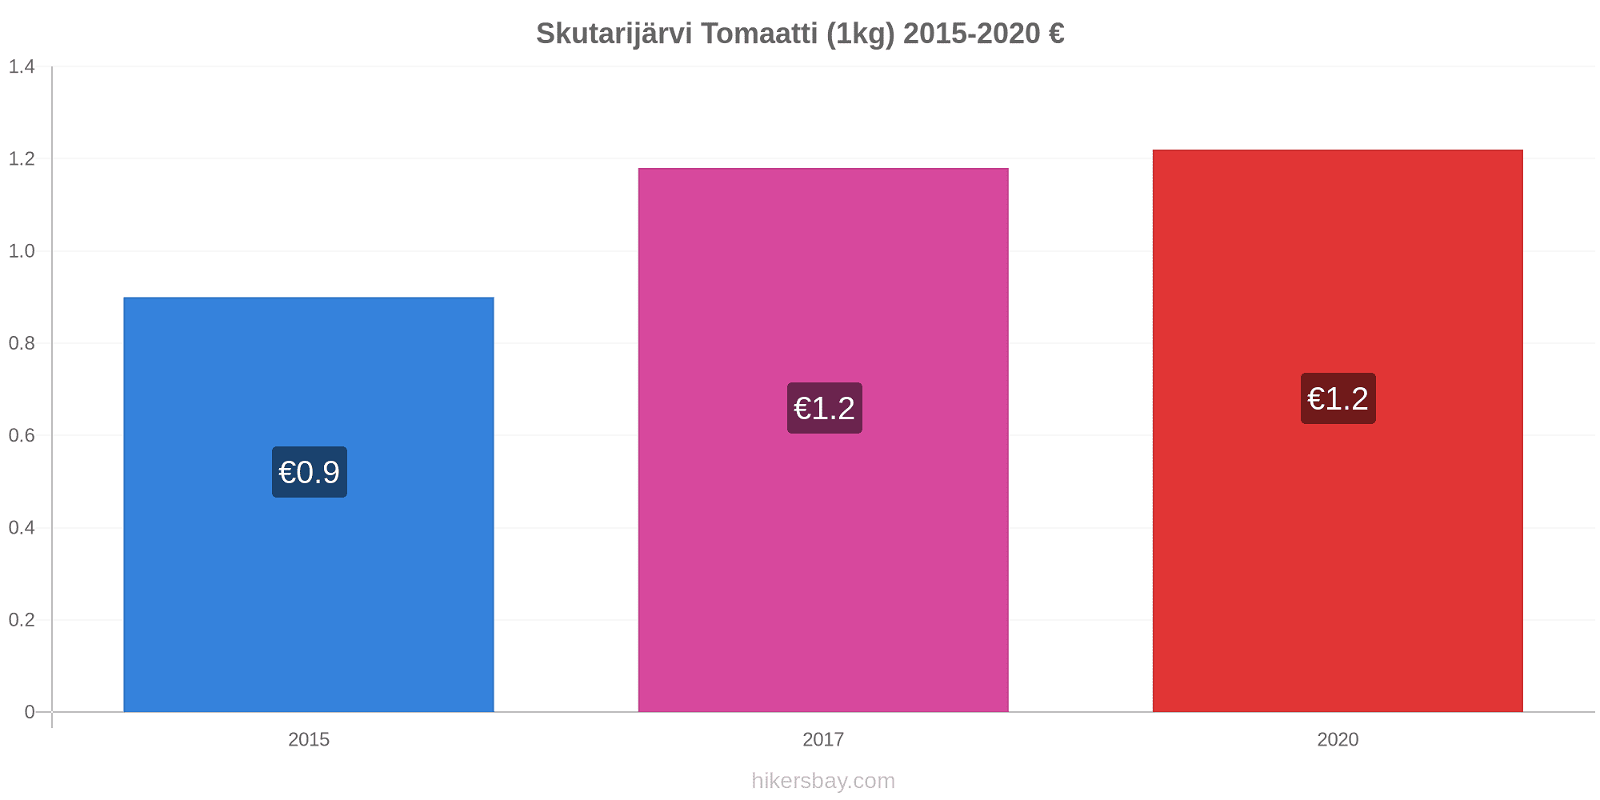 Skutarijärvi hintojen muutokset Tomaatti (1kg) hikersbay.com